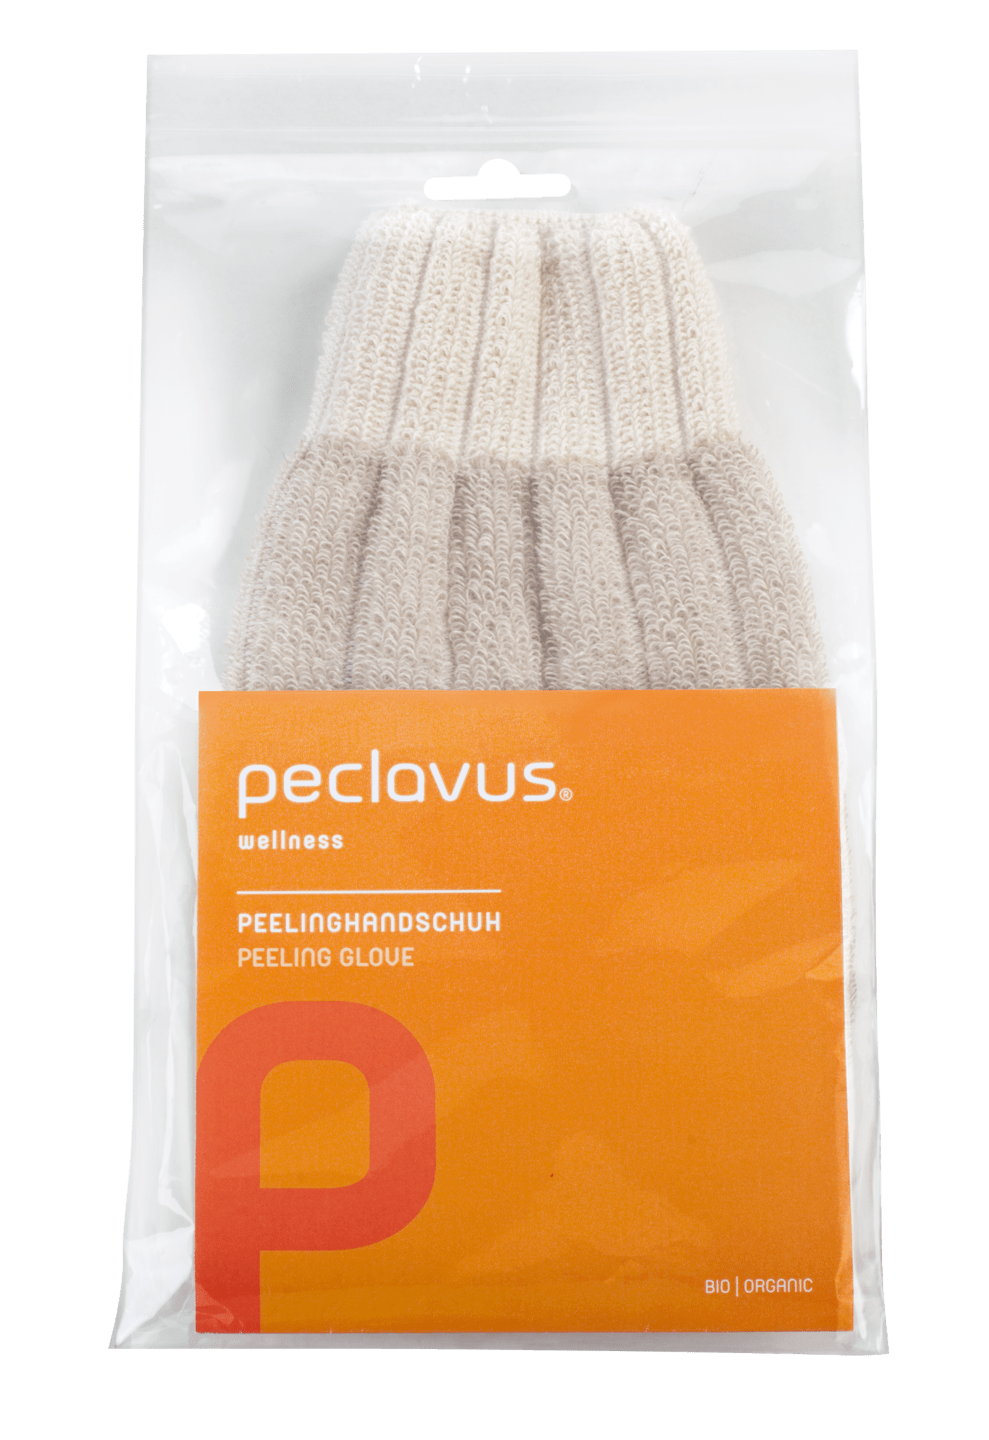 peclavus - Peelinghandschuh